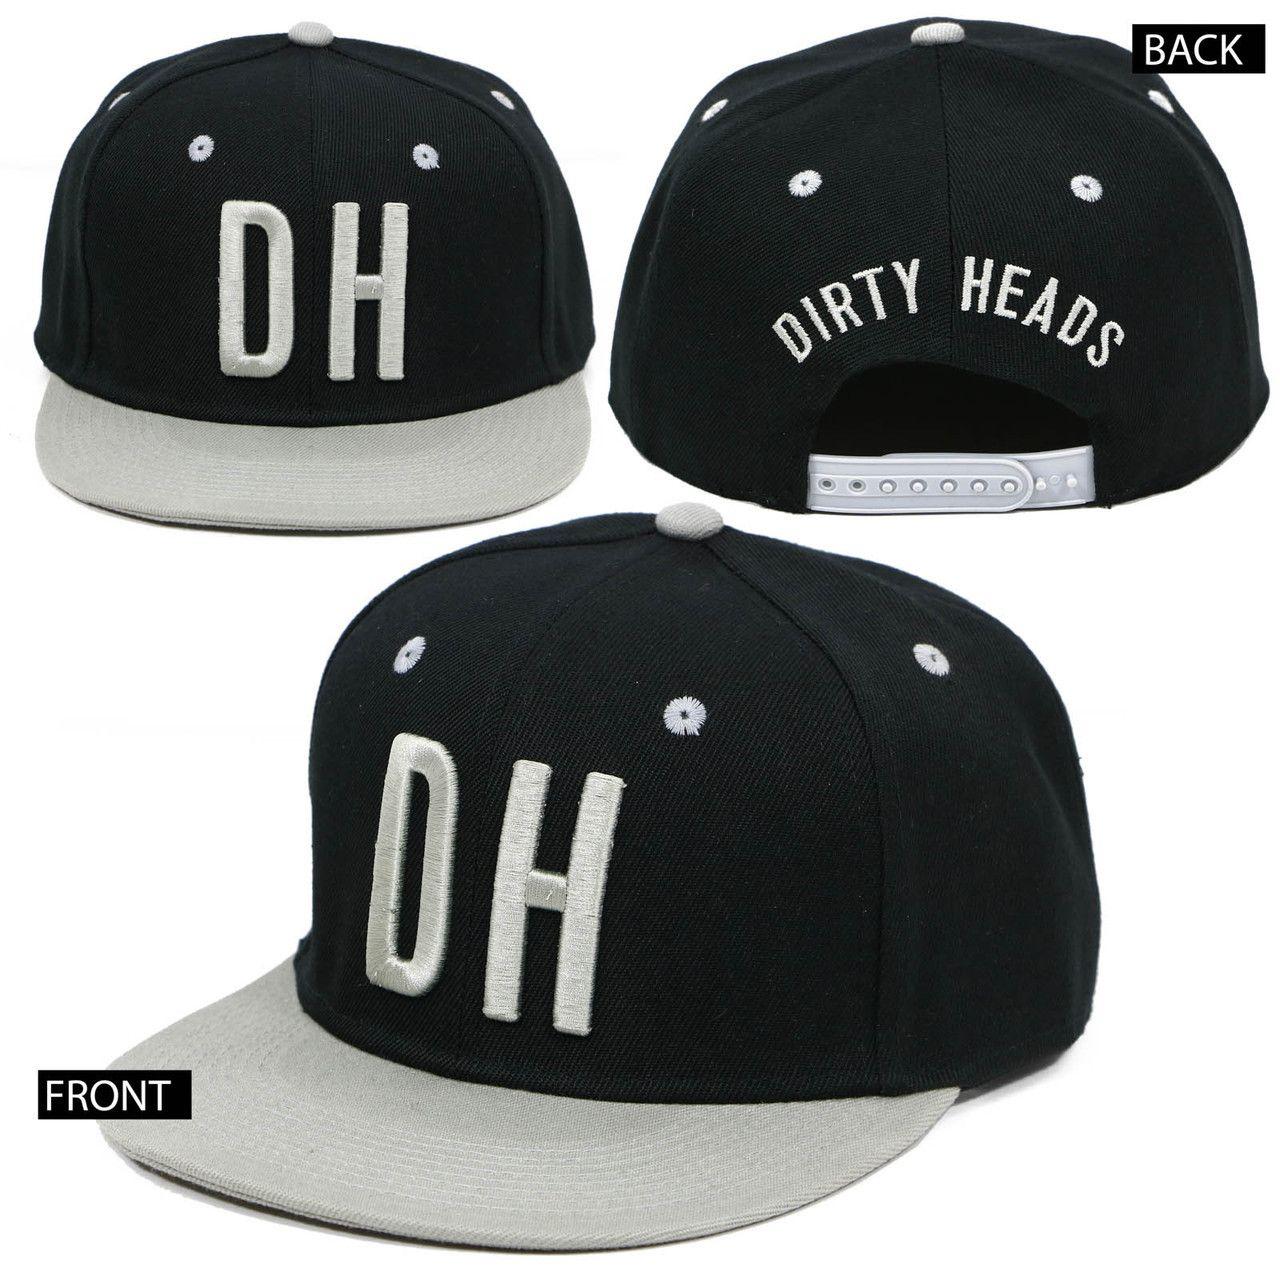 Fat Cap Logo - Dirty Heads Fat Cap Snapback Hat Alternative Clothing